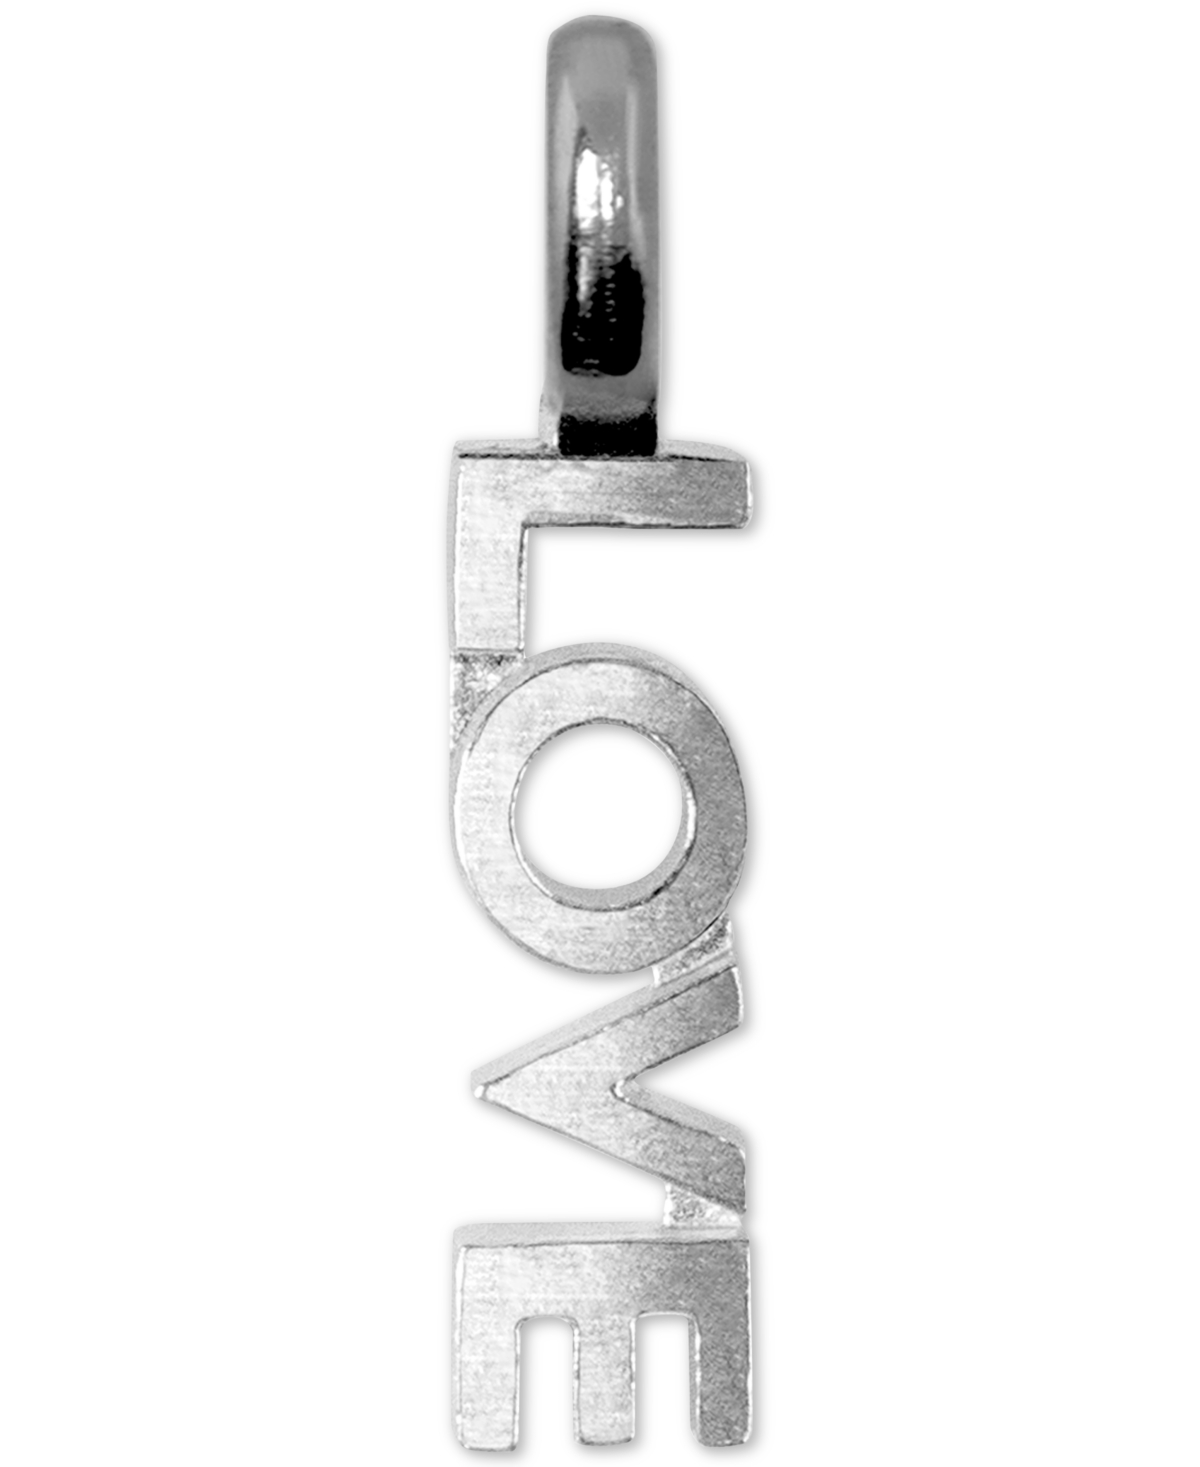 Mini Love Charm Pendant in Sterling Silver - Sterling Silver